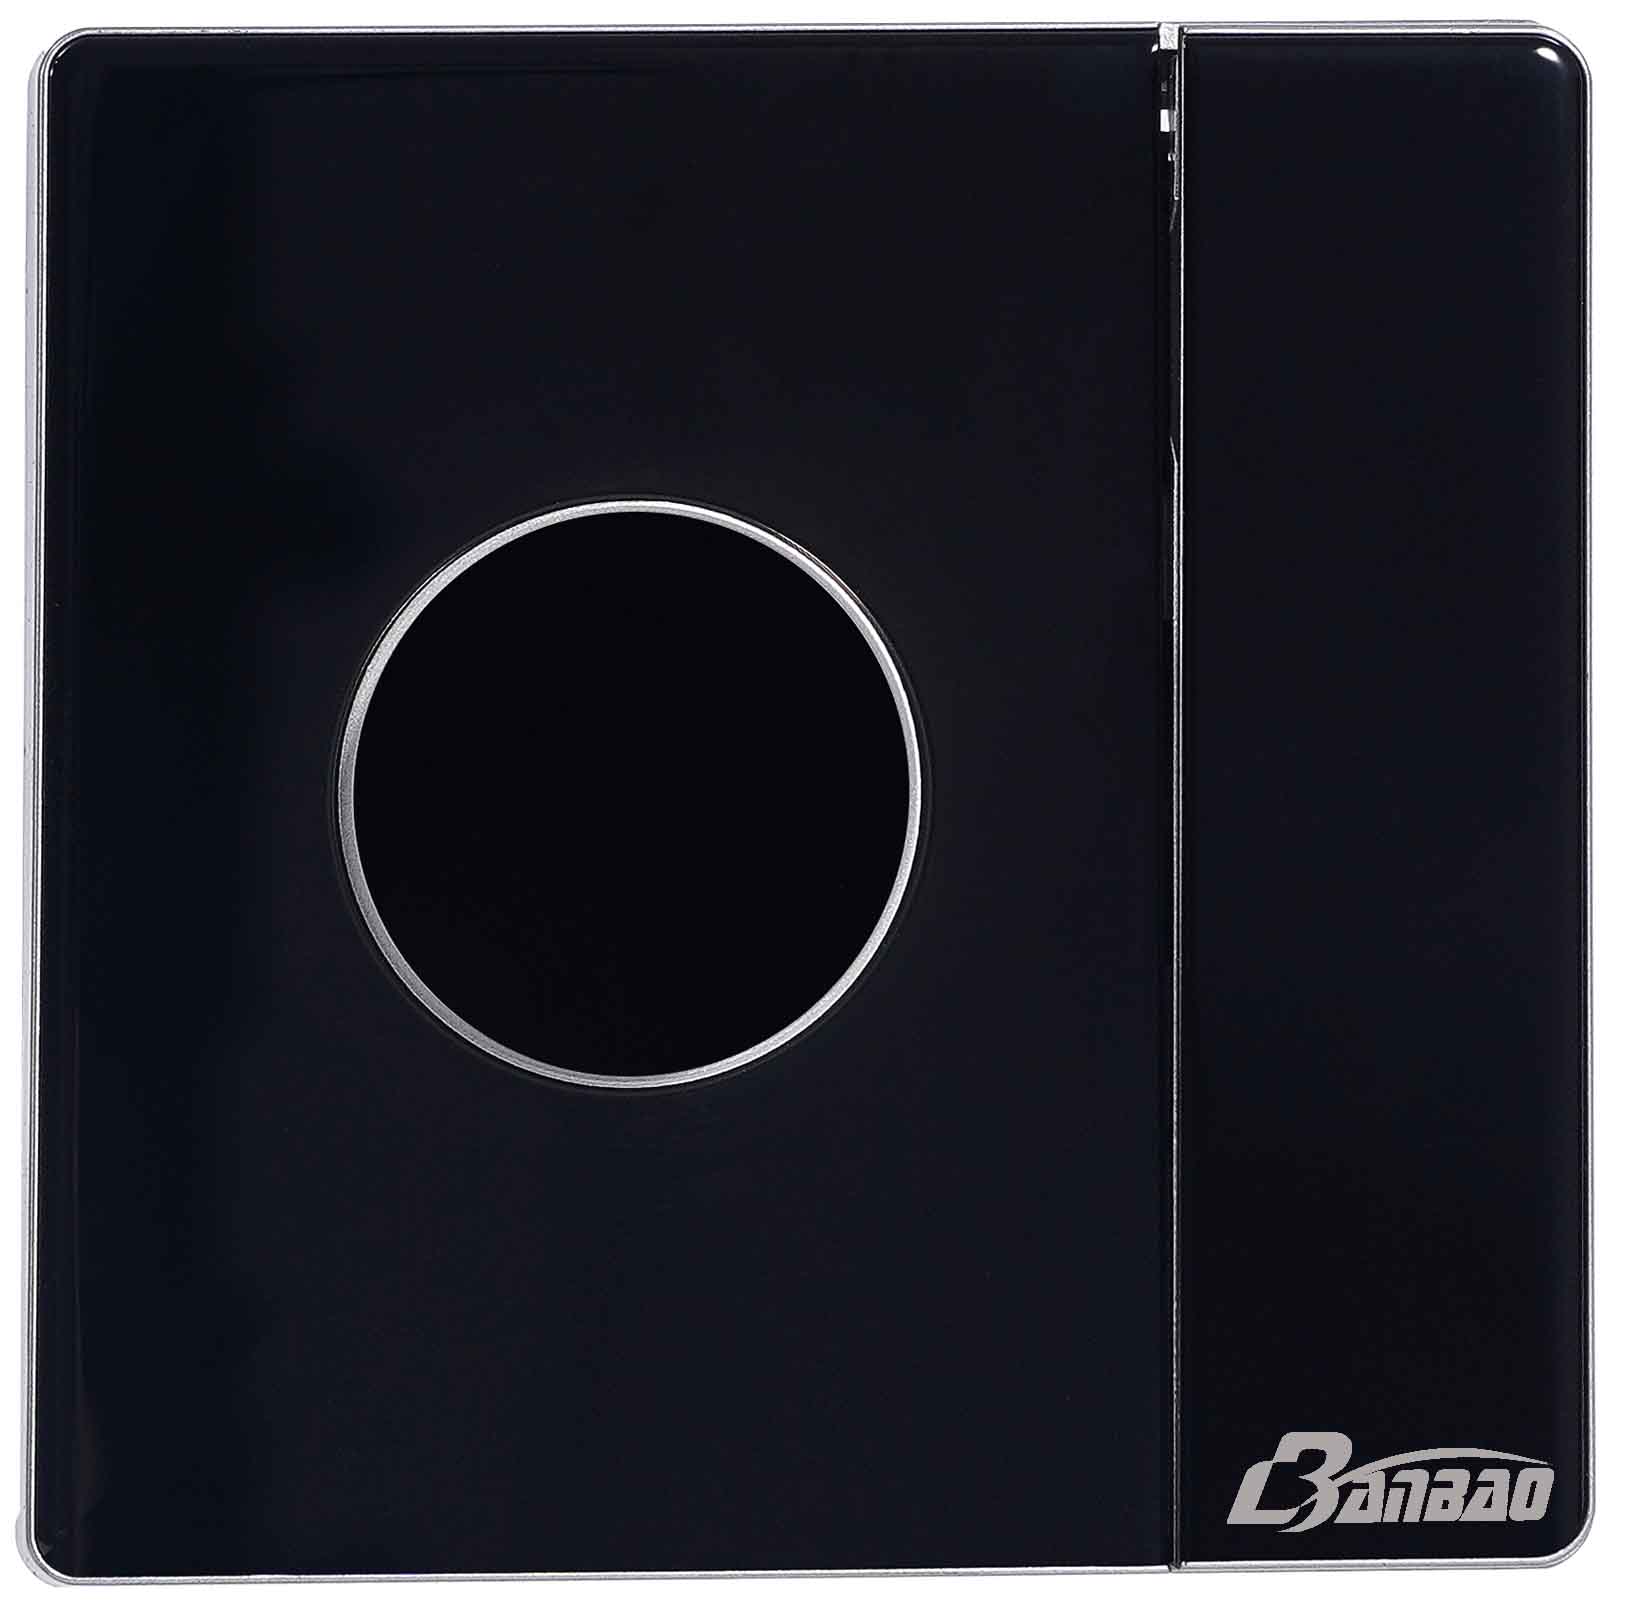 1gang Big Button 2 +3pin multi wall socket Black color Glass panel